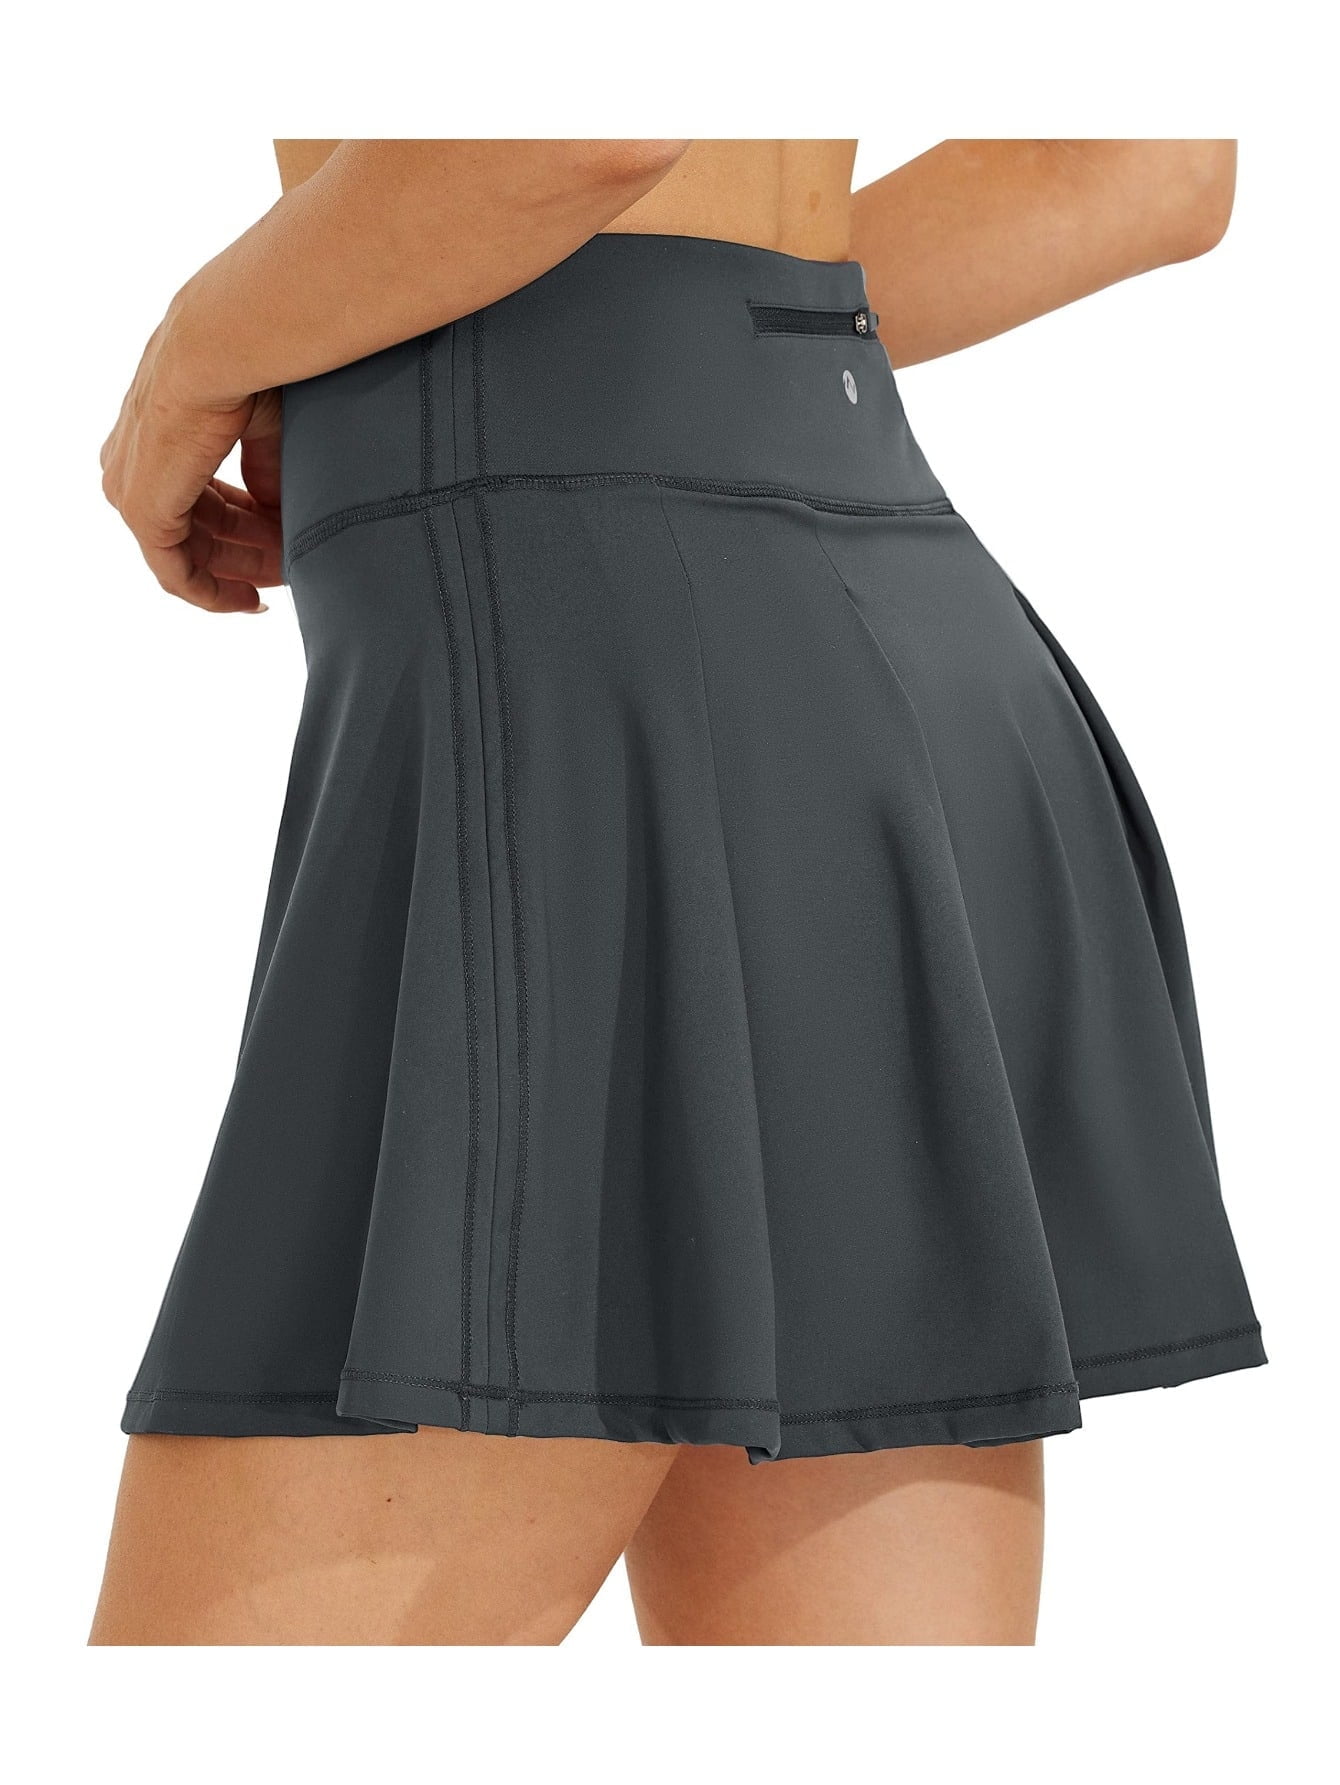 Werena Pleated Tennis Skirt w Pockets Skort Shorts Athletic Golf, Black,  Medium